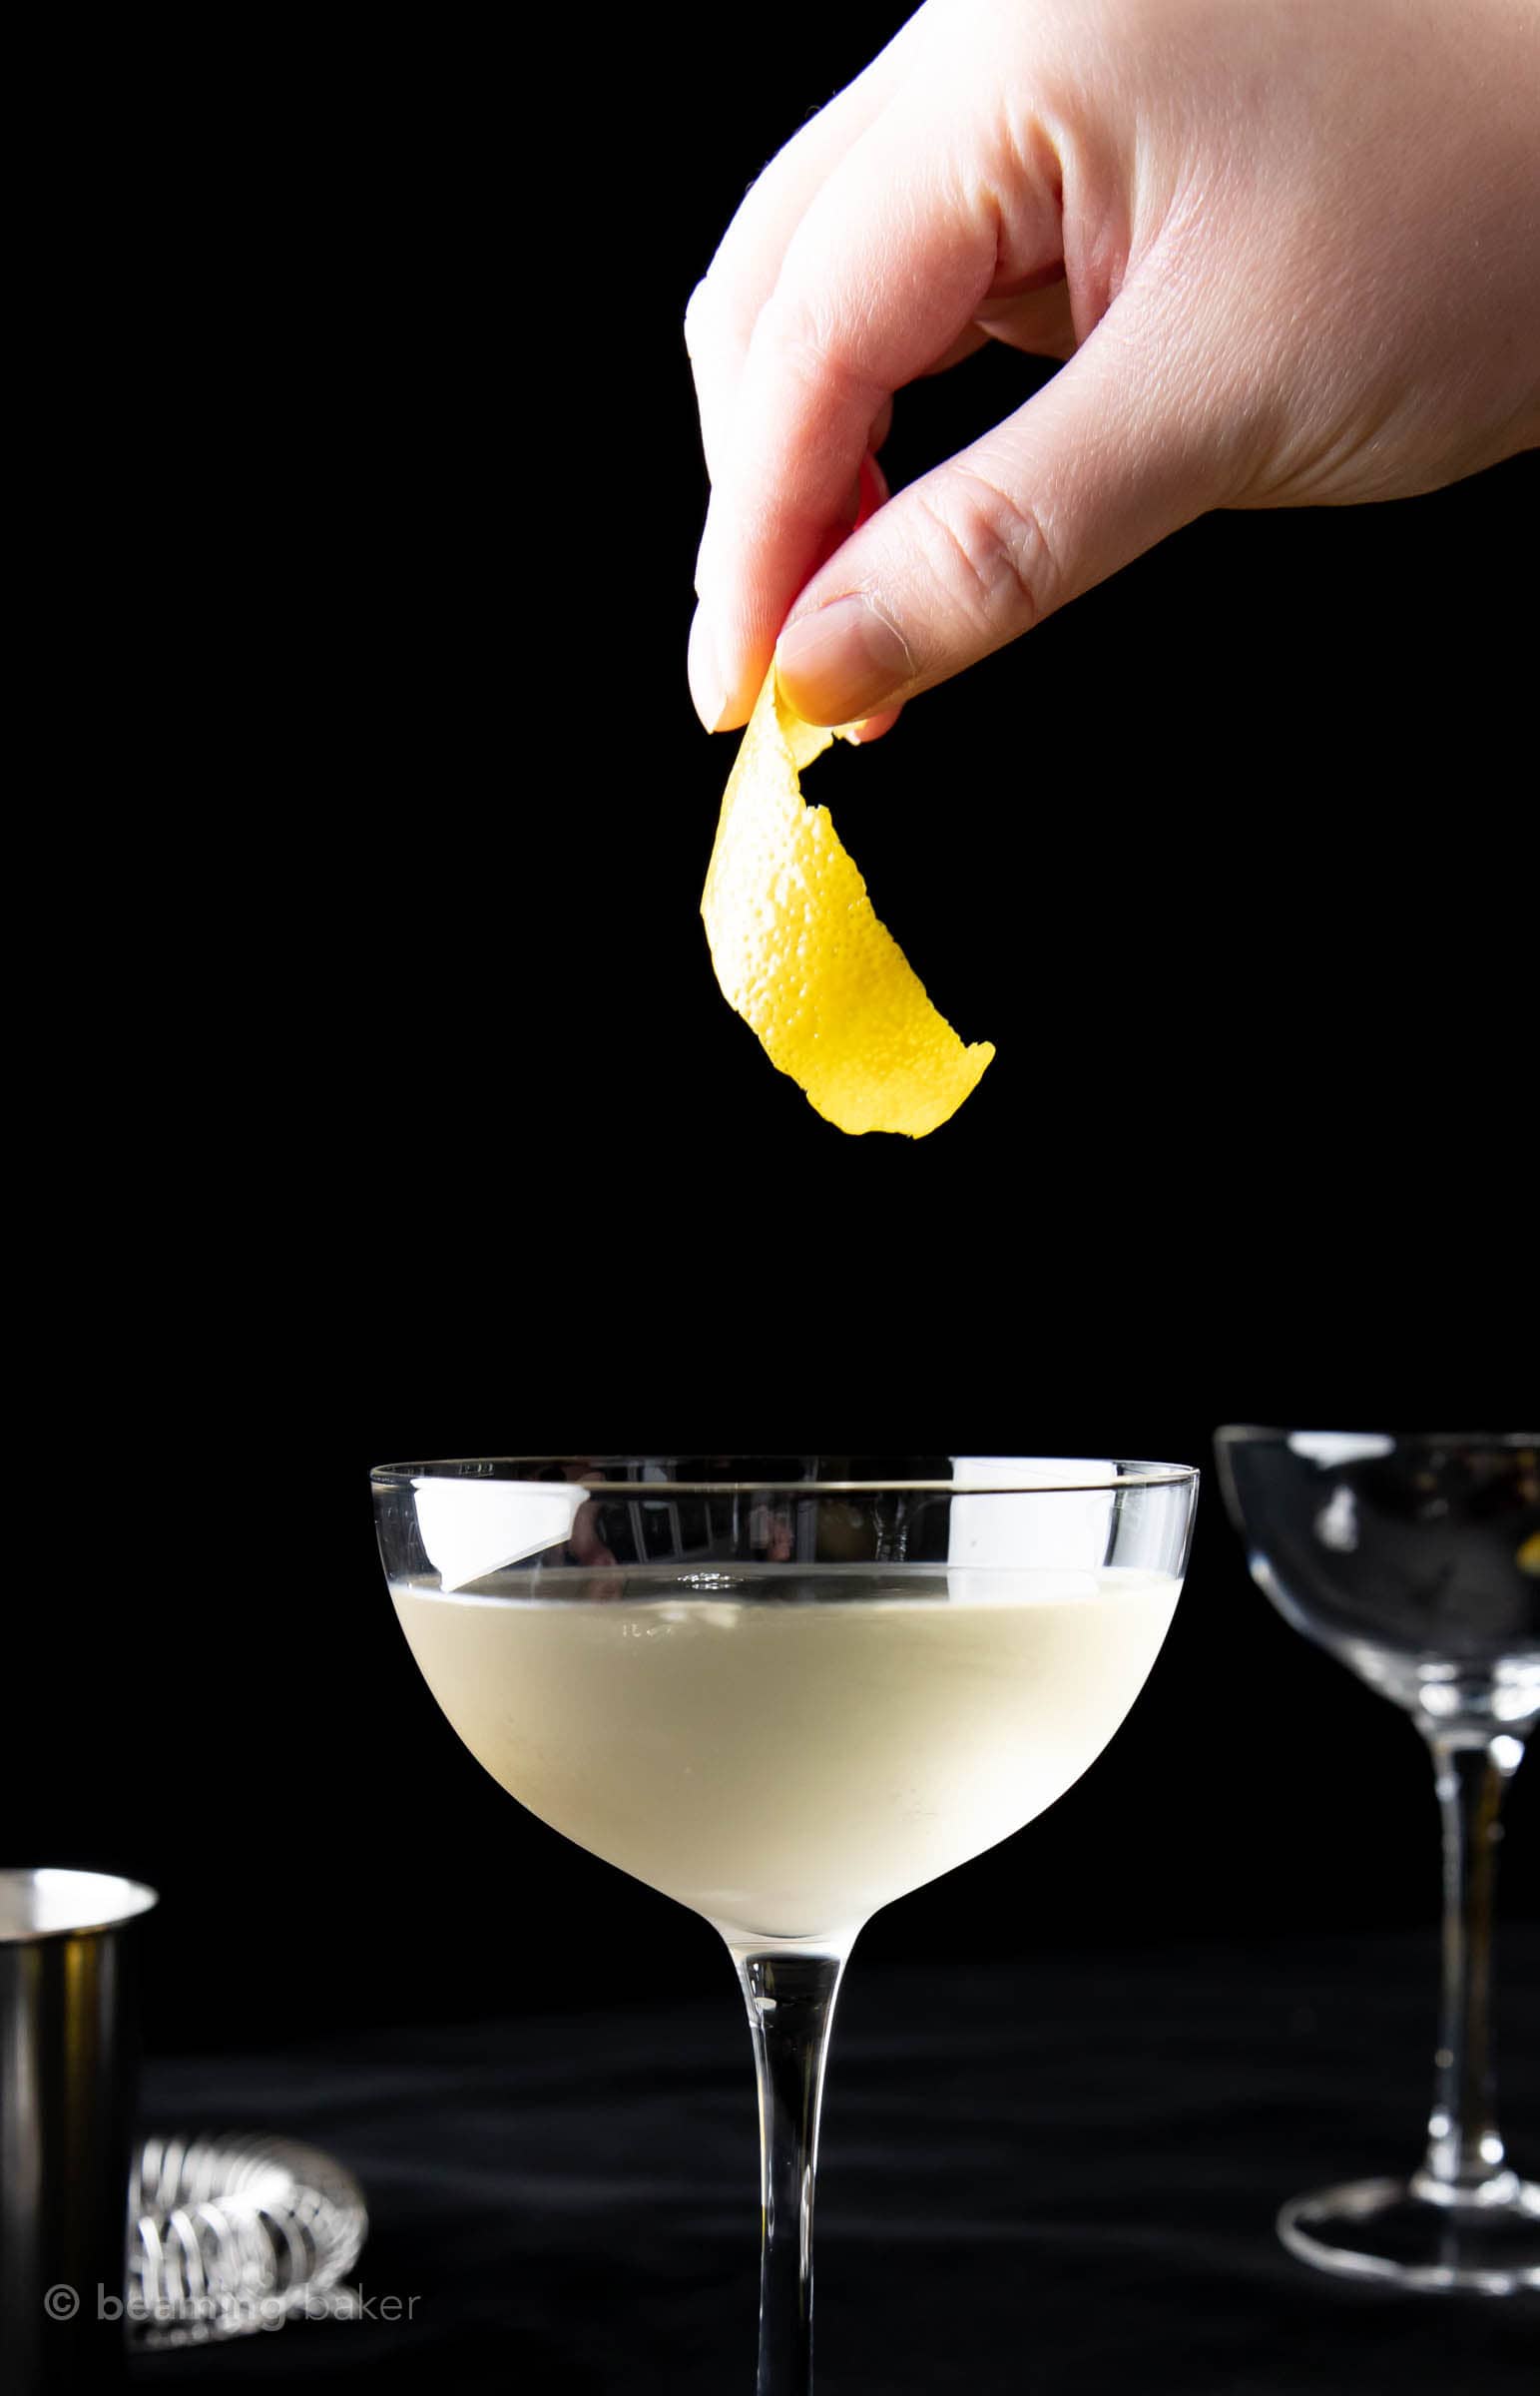 Hand dropping lemon garnish into cocktail glass